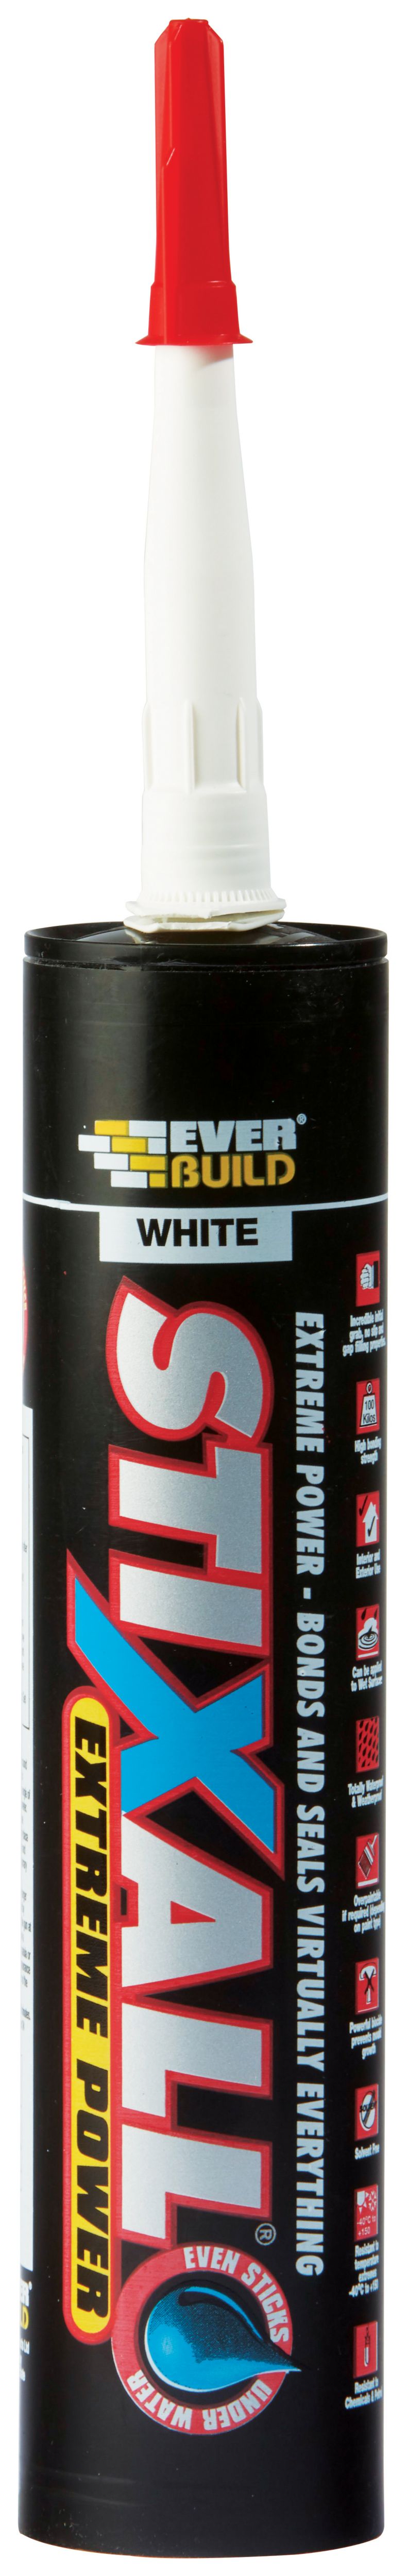 Image of Everbuild Stixall Extreme Power 290ml Sealant & Adhesive - White